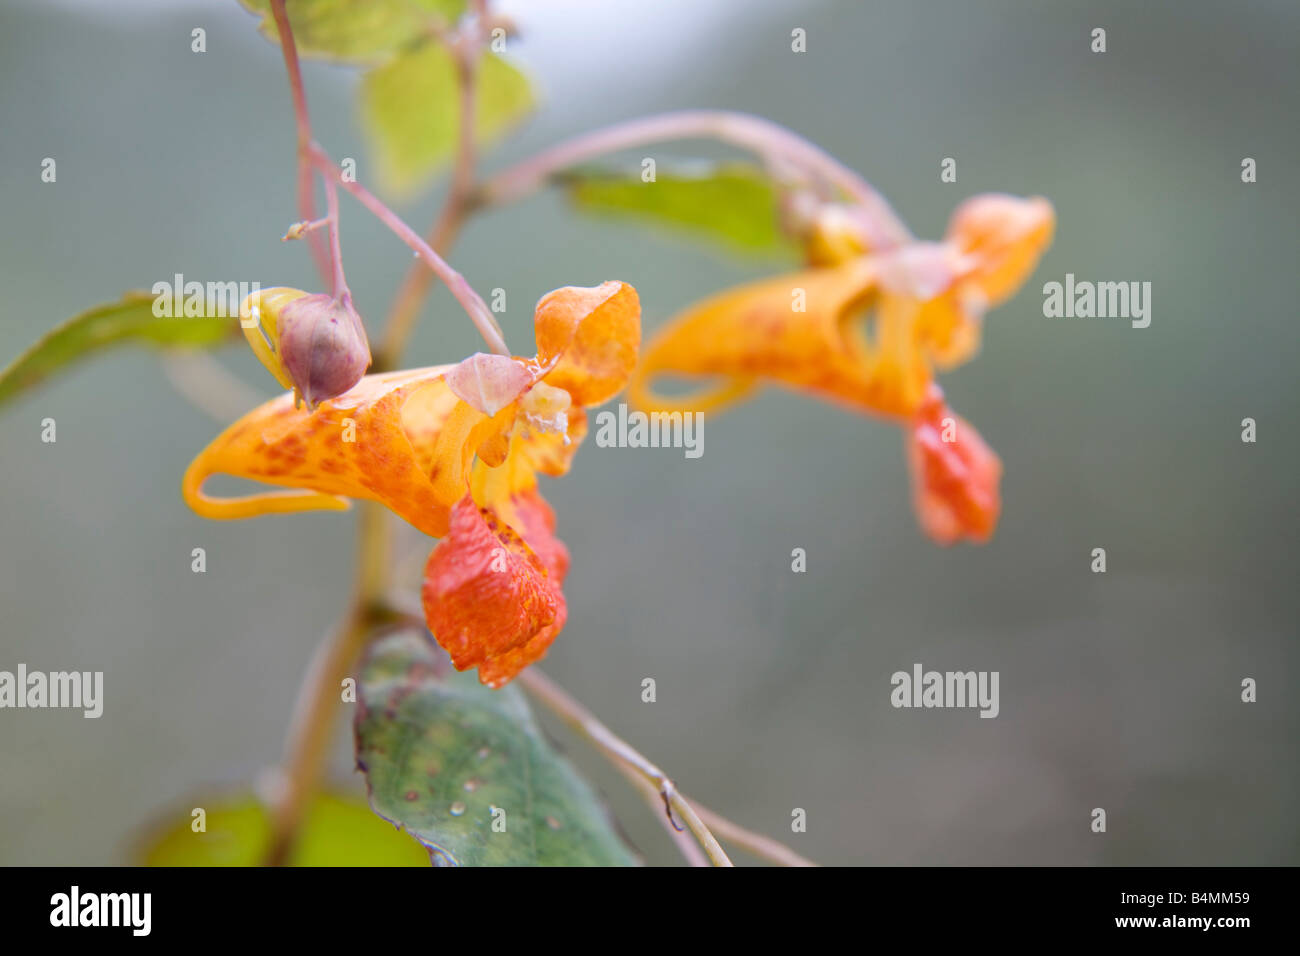 orange balsam Impatiens capensis Stock Photo